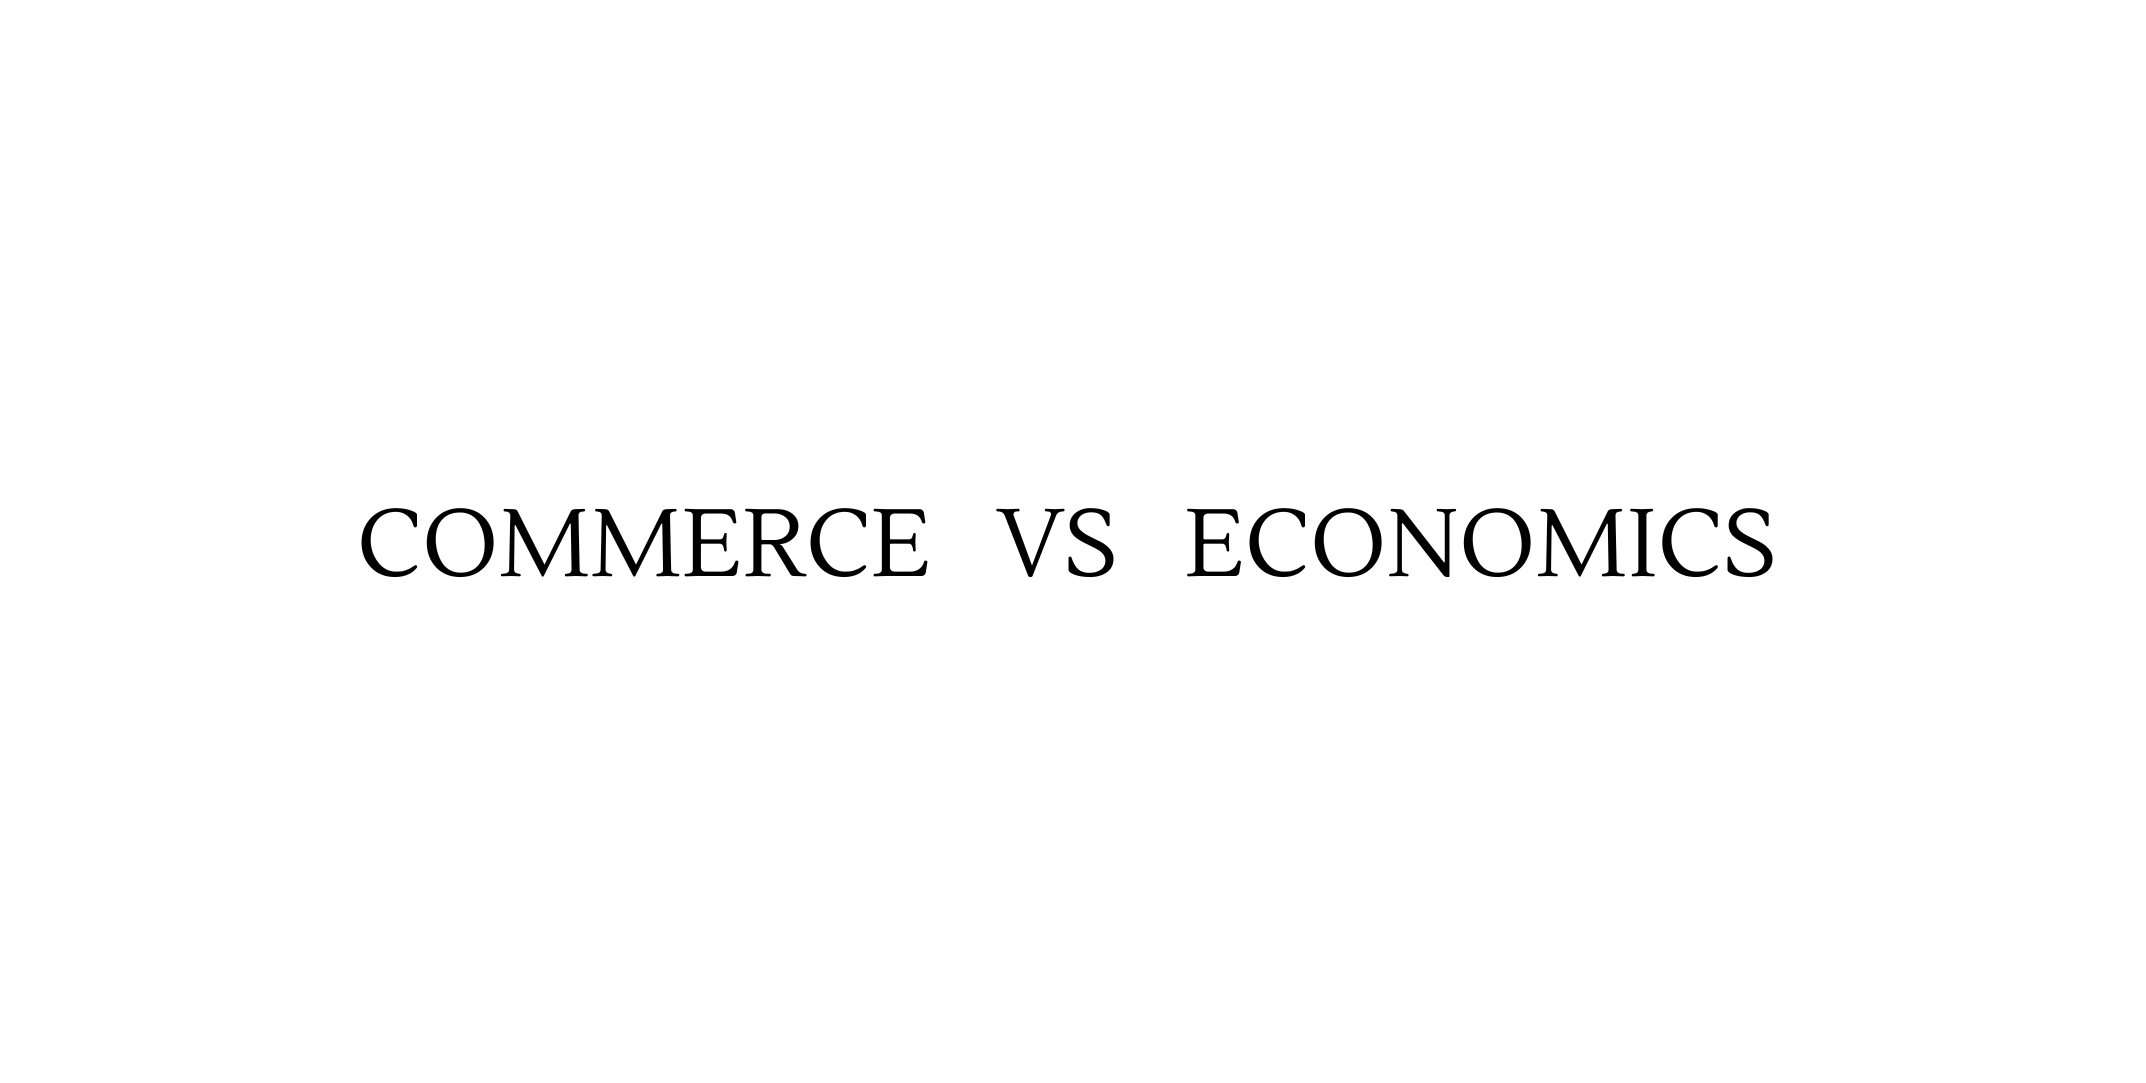 COMMERCE vs ECONOMICS